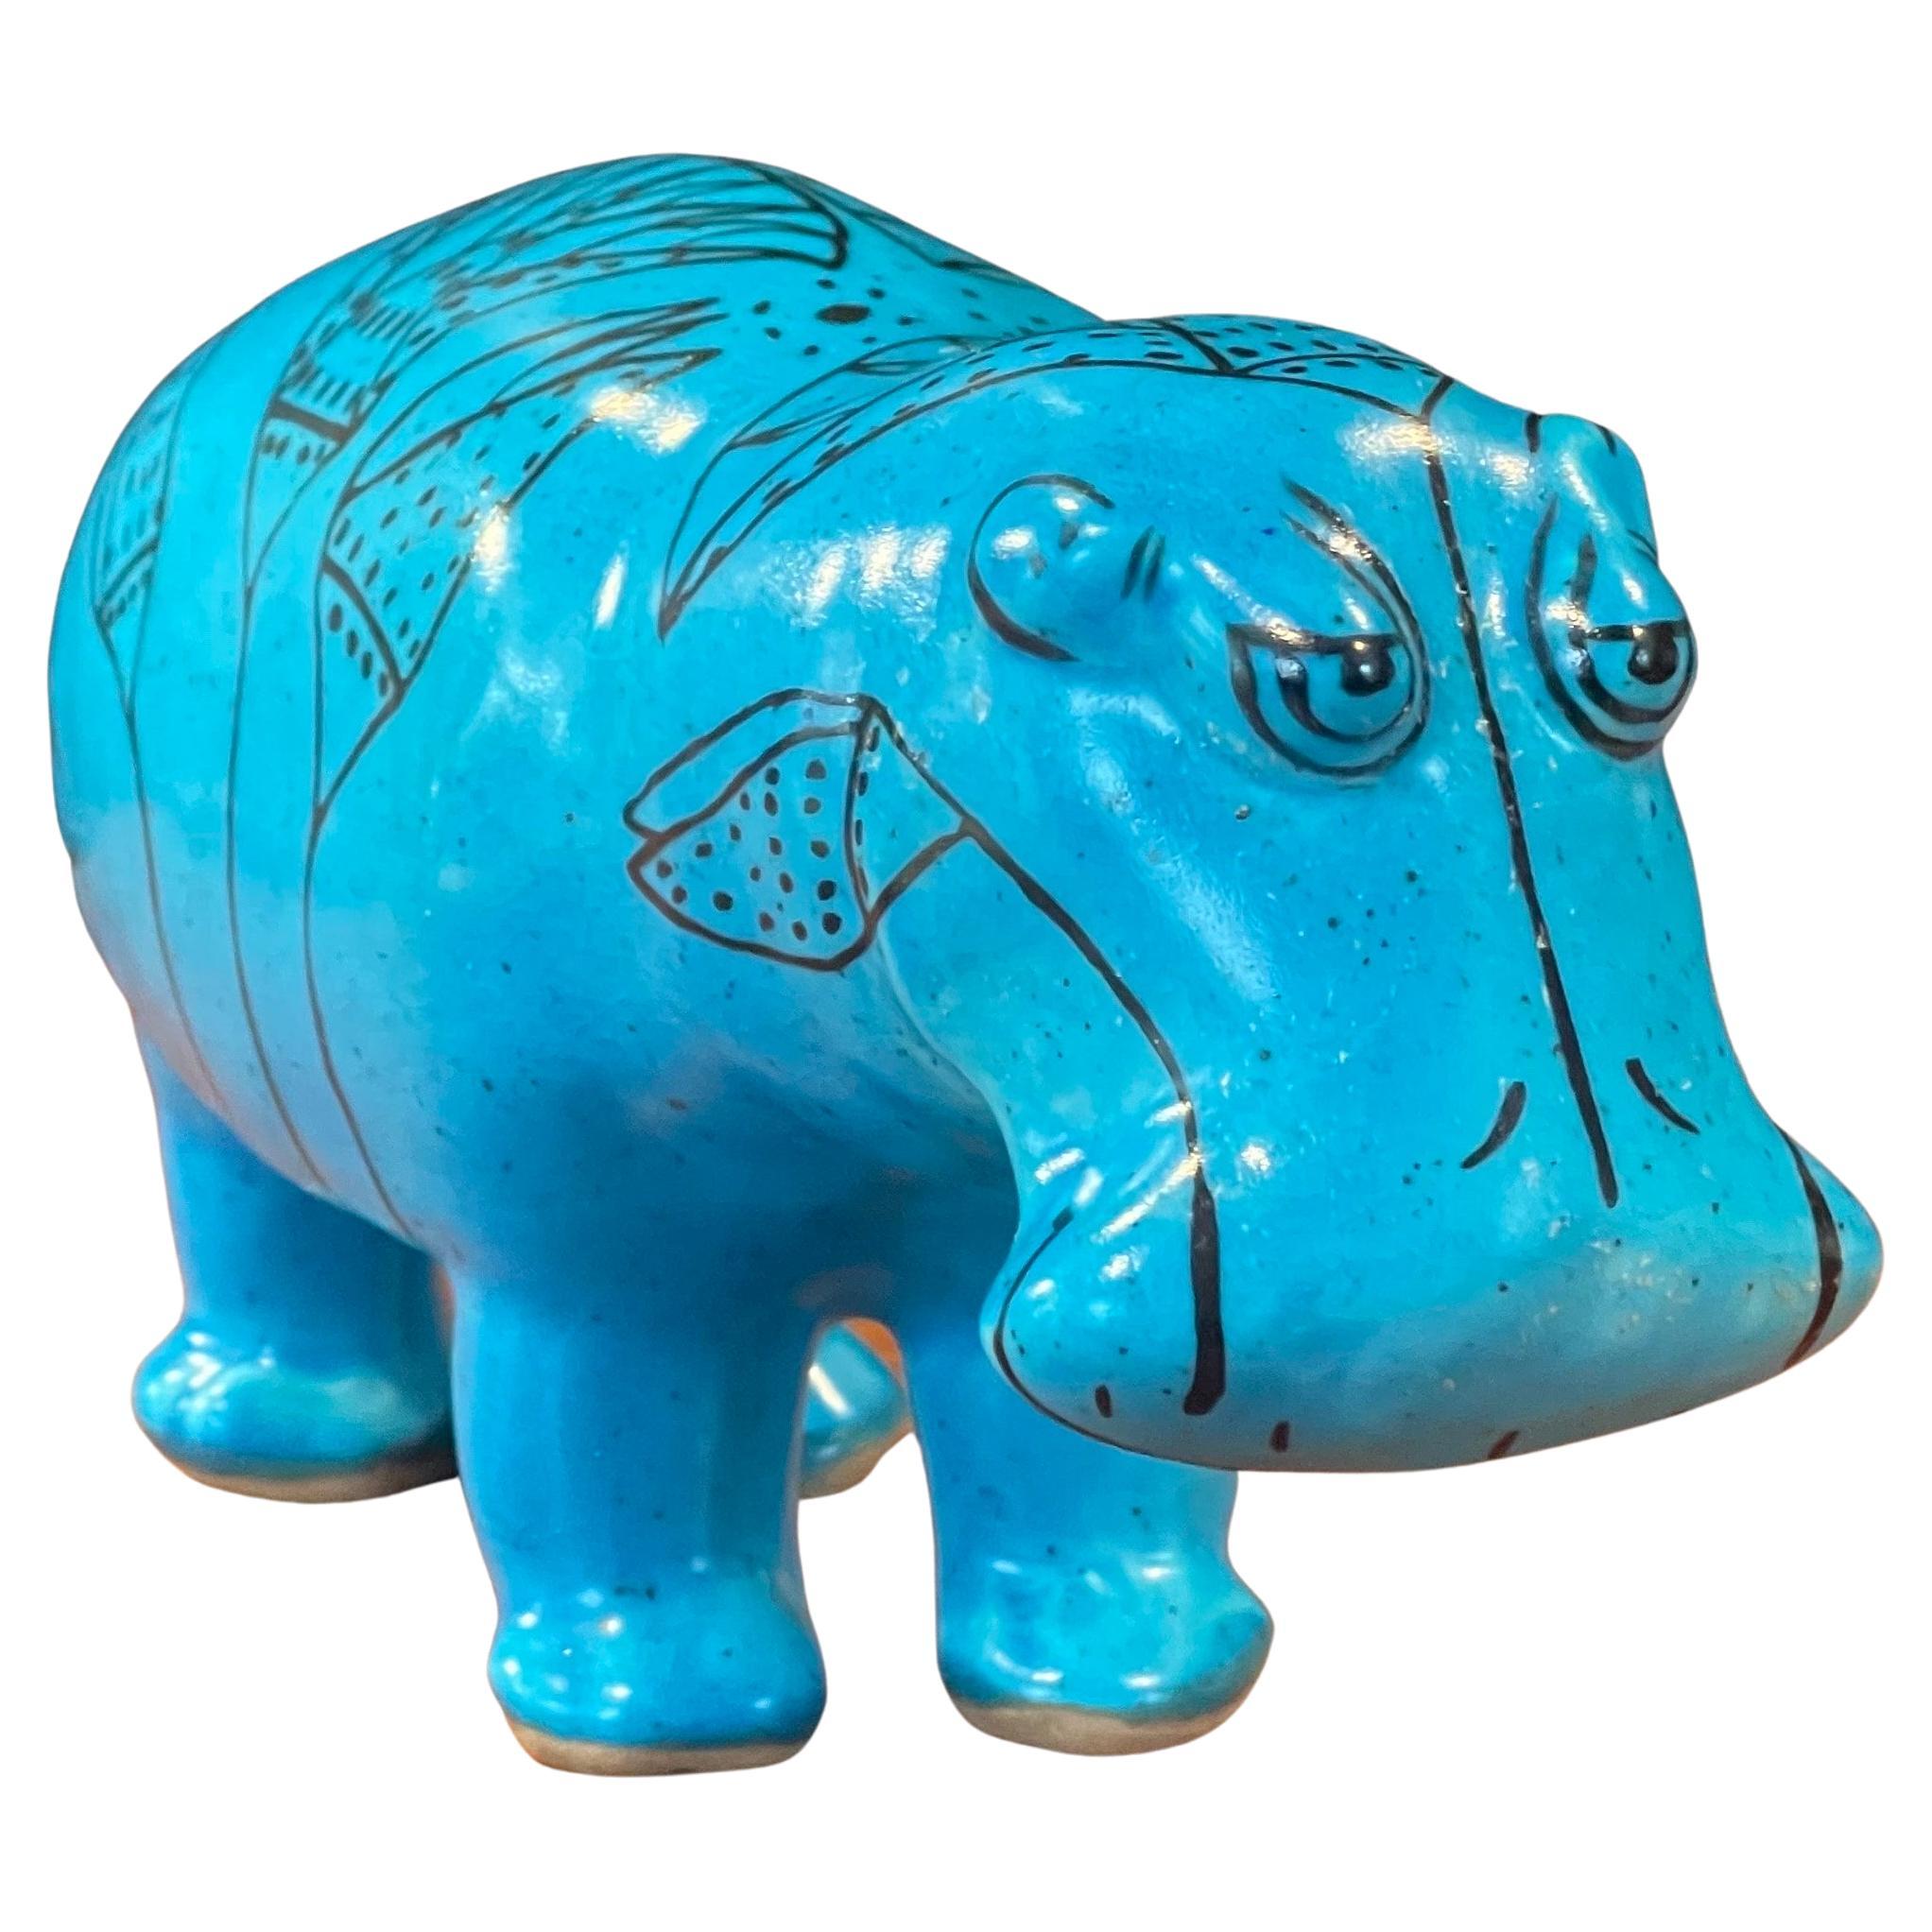 Sculpture en céramique bleue « William the Hippo » (William le Hippo) du Metropolitan Museum